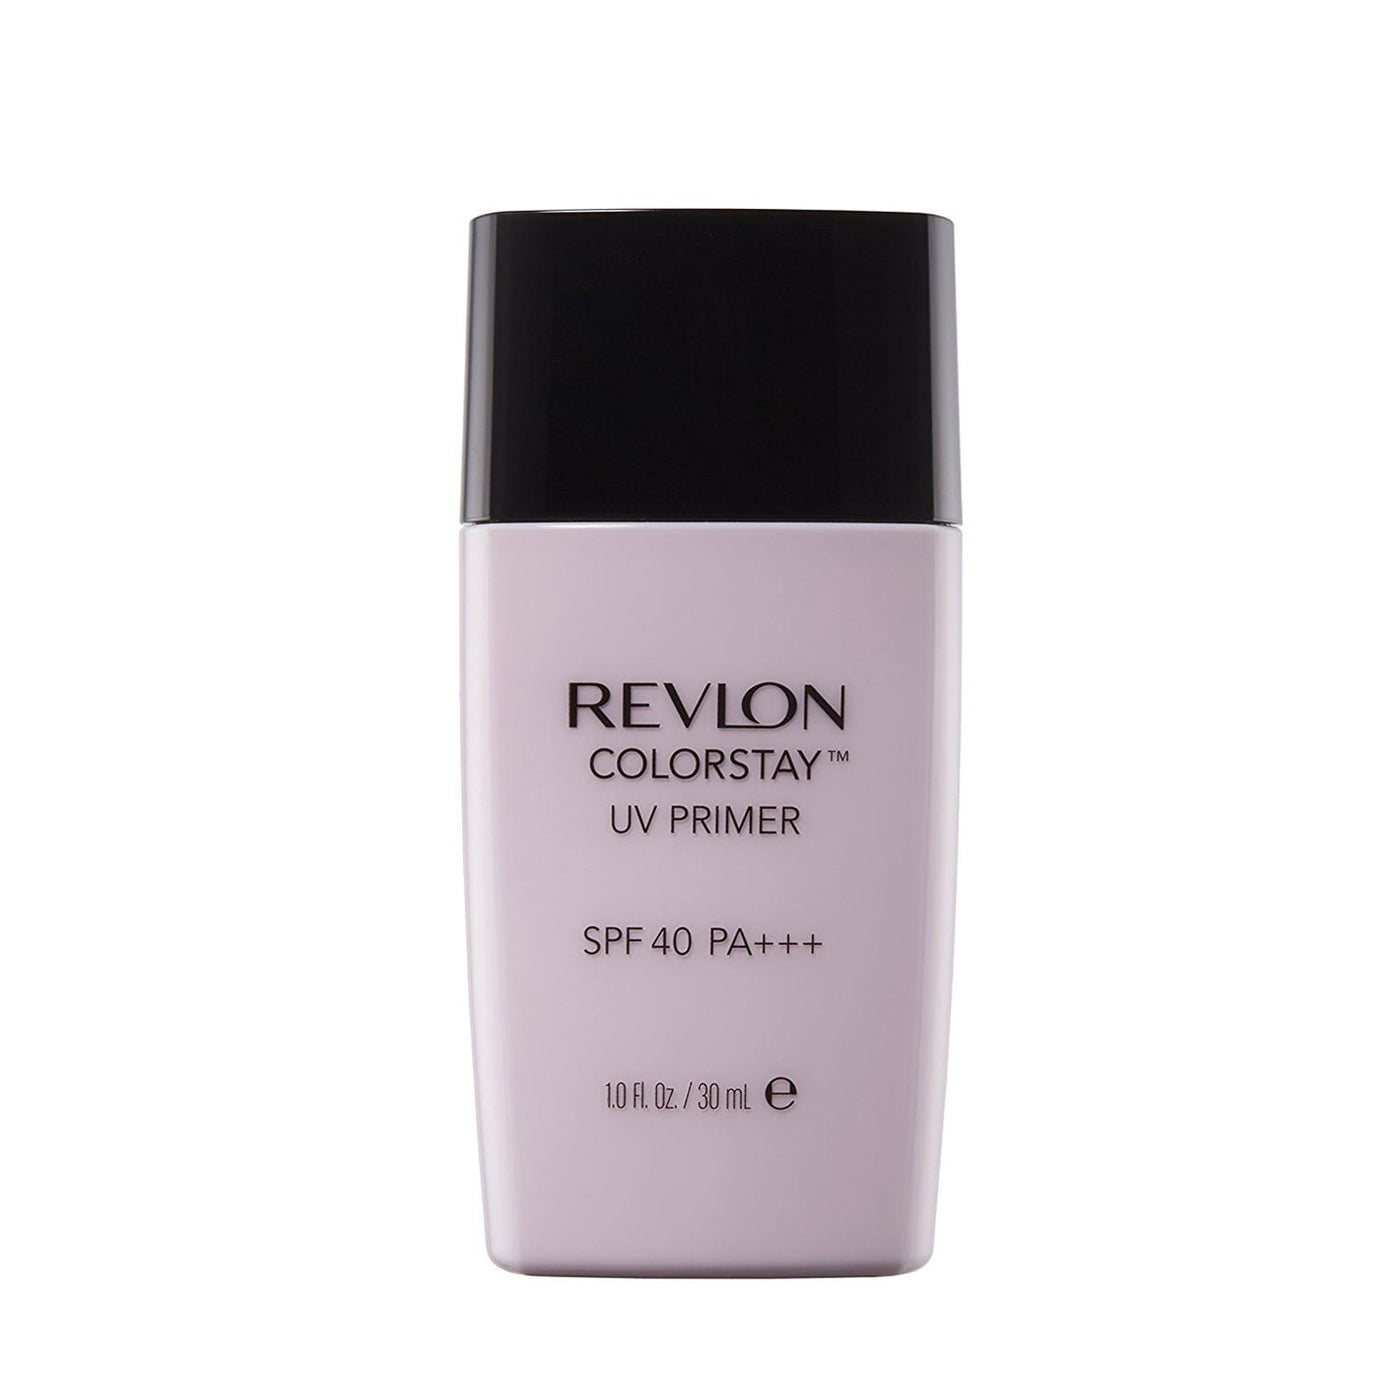 Revlon Colorstay UV primer